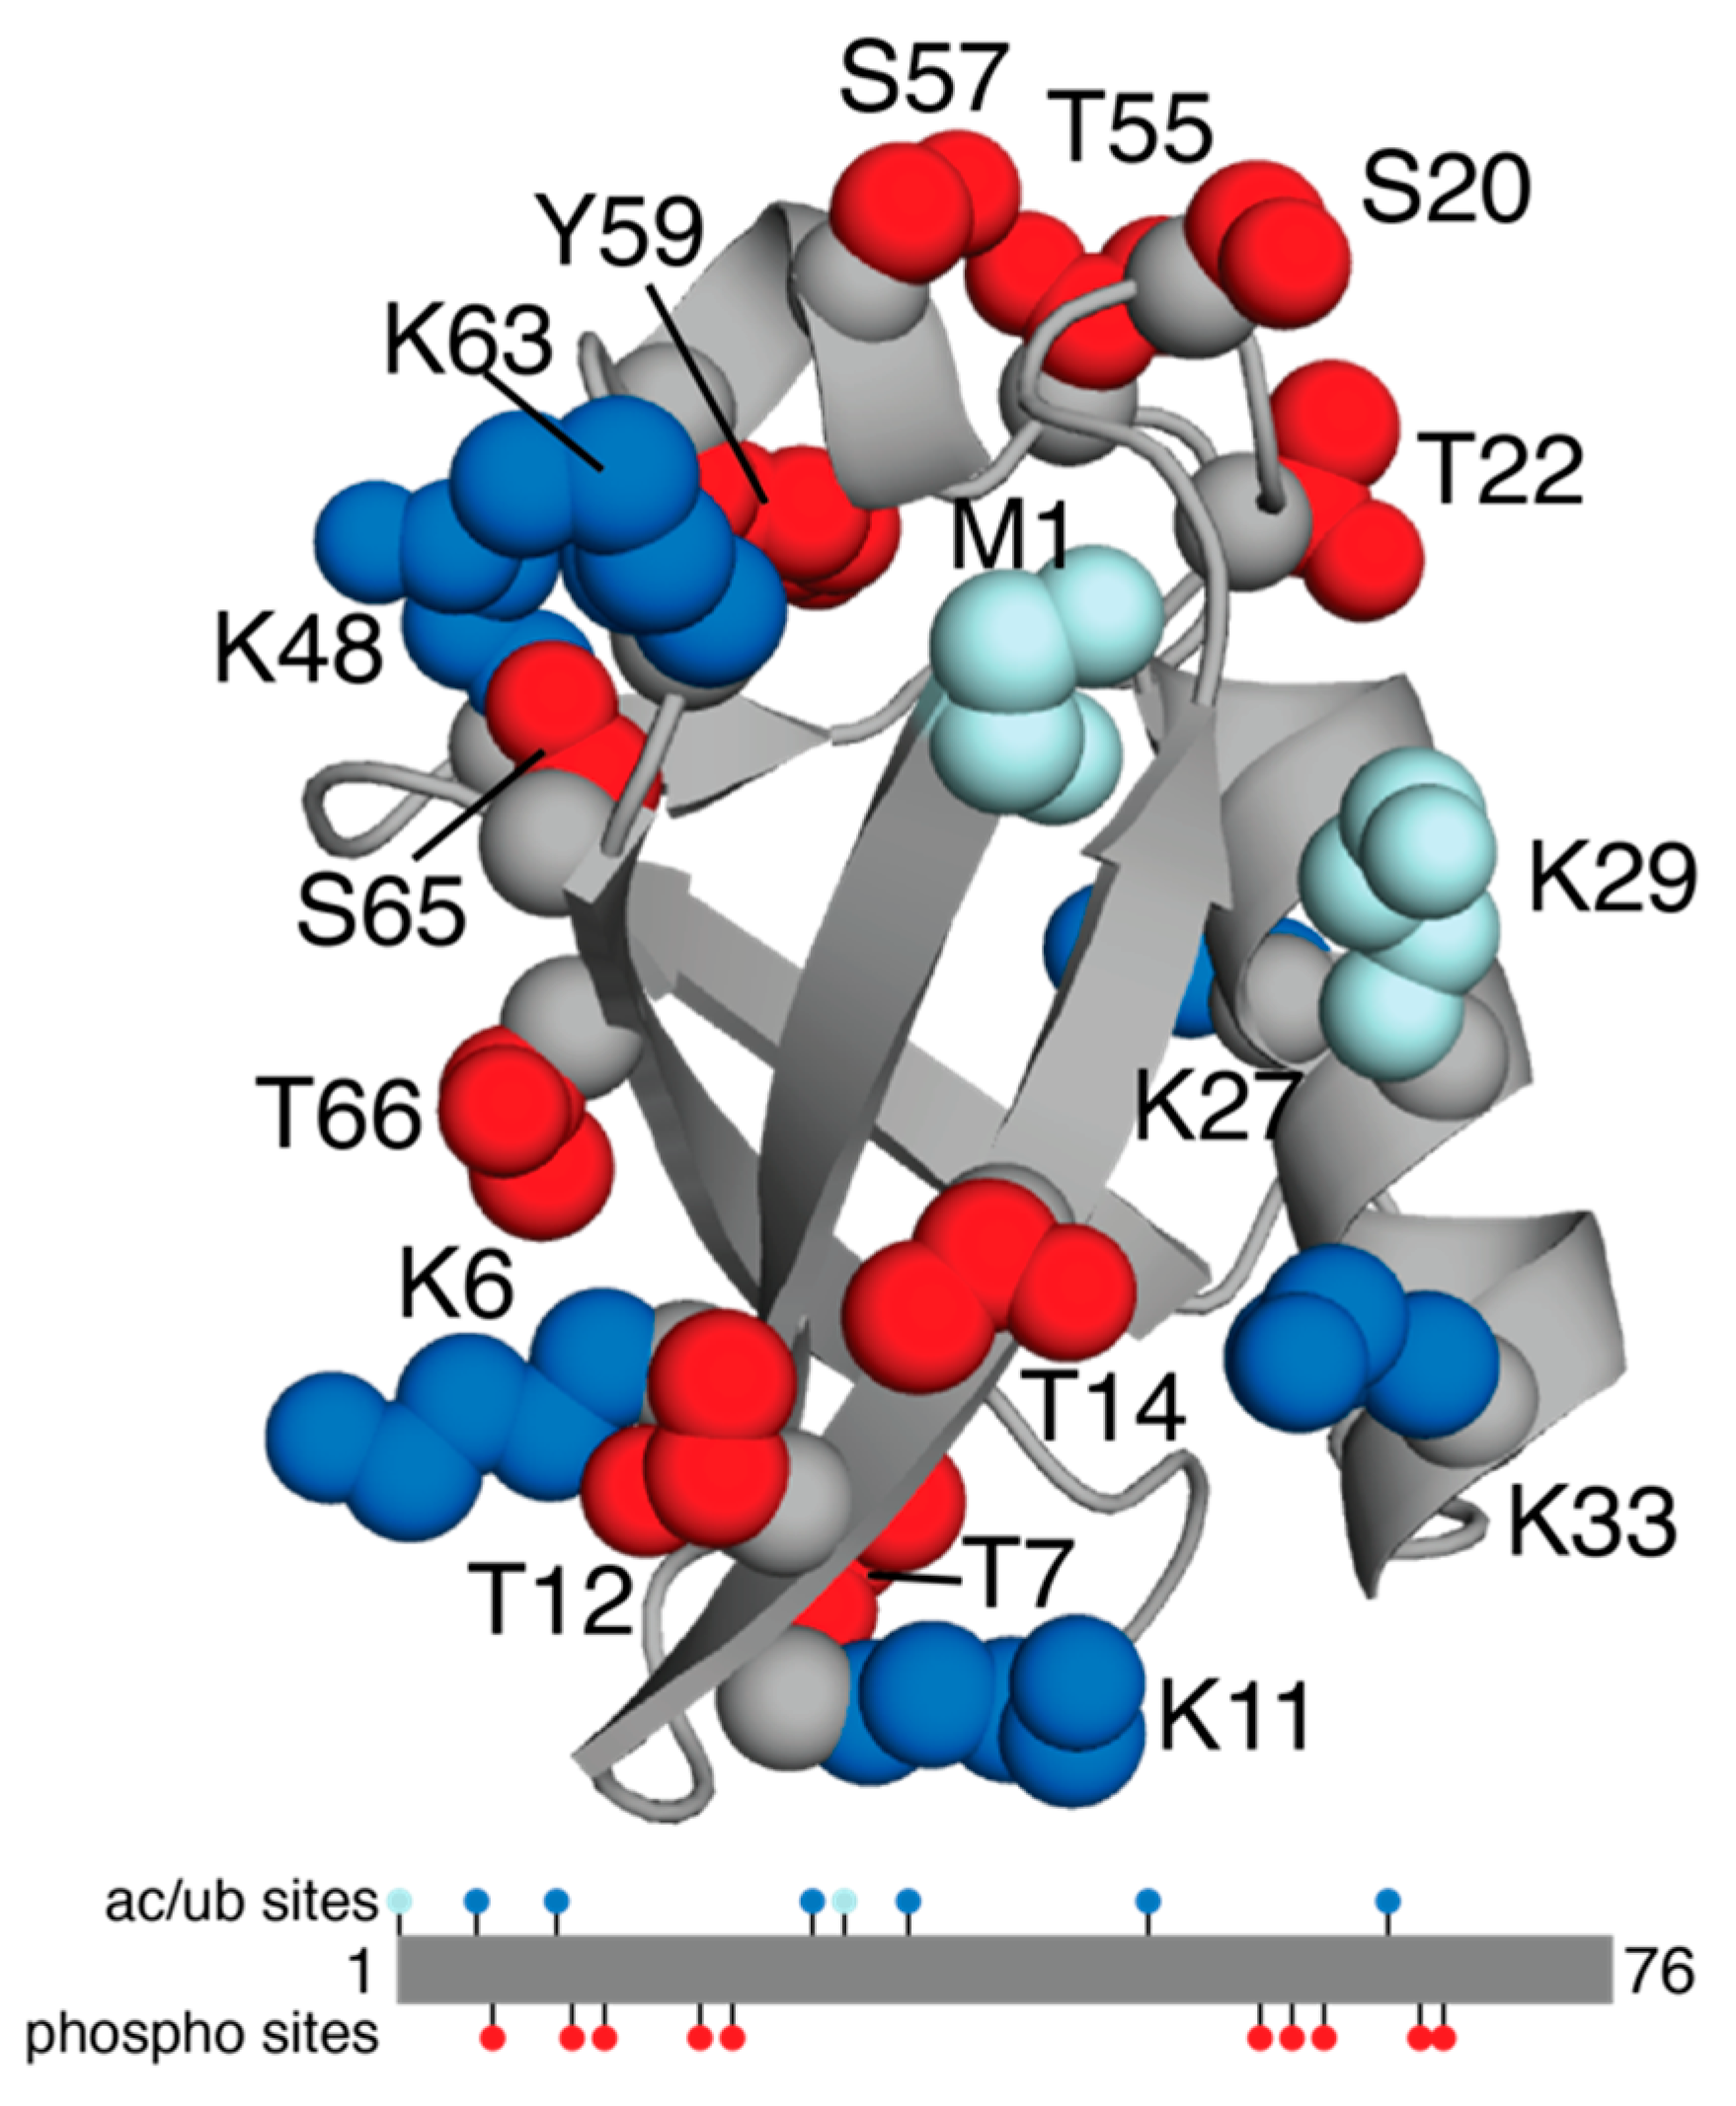 https://pub.mdpi-res.com/biomolecules/biomolecules-12-00467/article_deploy/html/images/biomolecules-12-00467-g001.png?1647595469